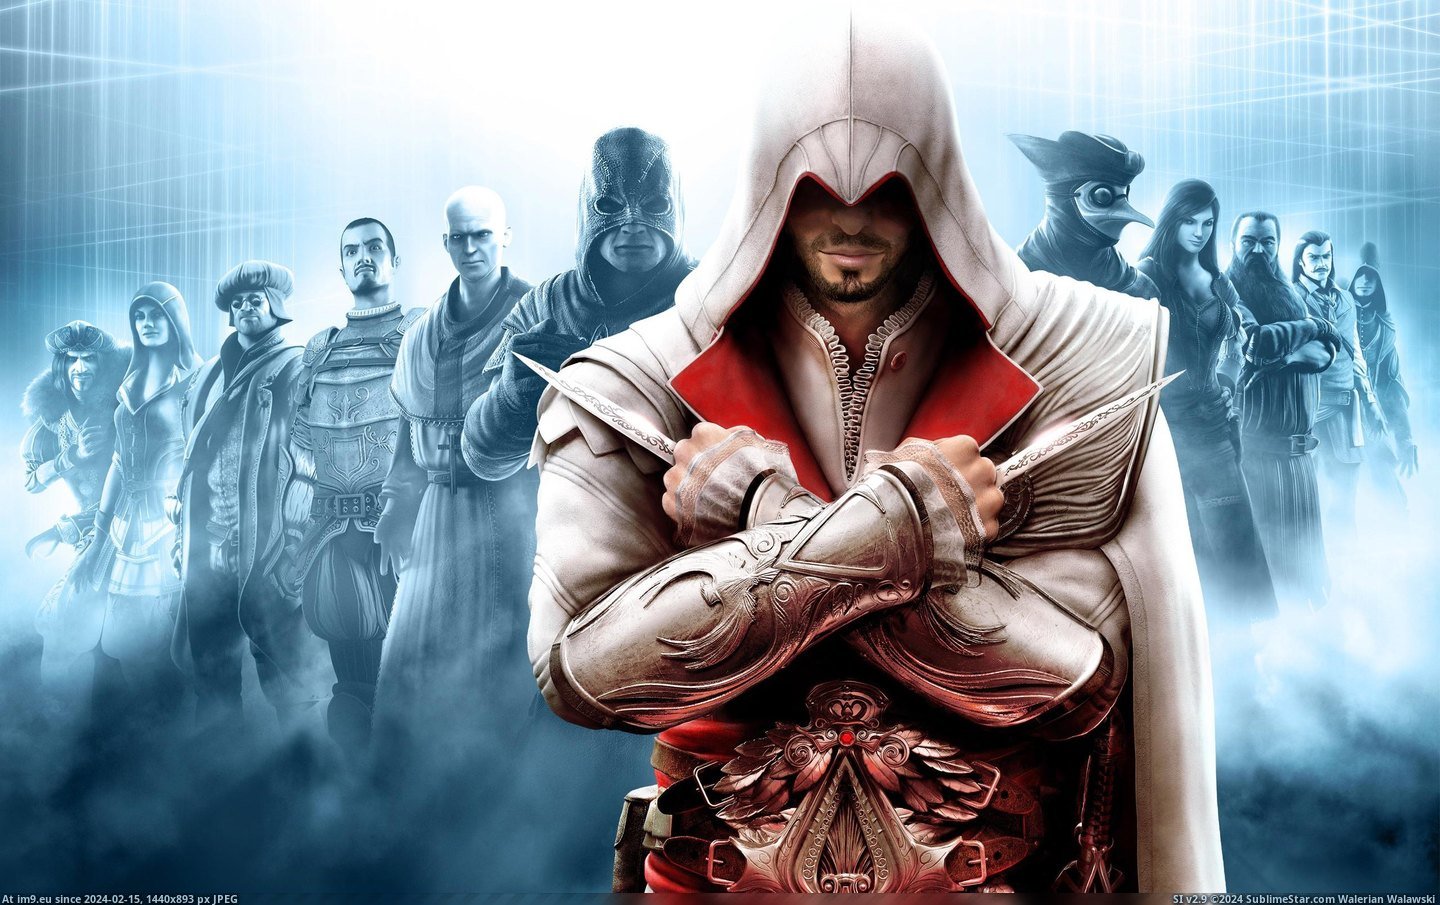 #Wallpaper #Wide #Brotherhood #Creed #Assassins Assassins Creed Brotherhood 3 Wide HD Wallpaper Pic. (Bild von album Unique HD Wallpapers))